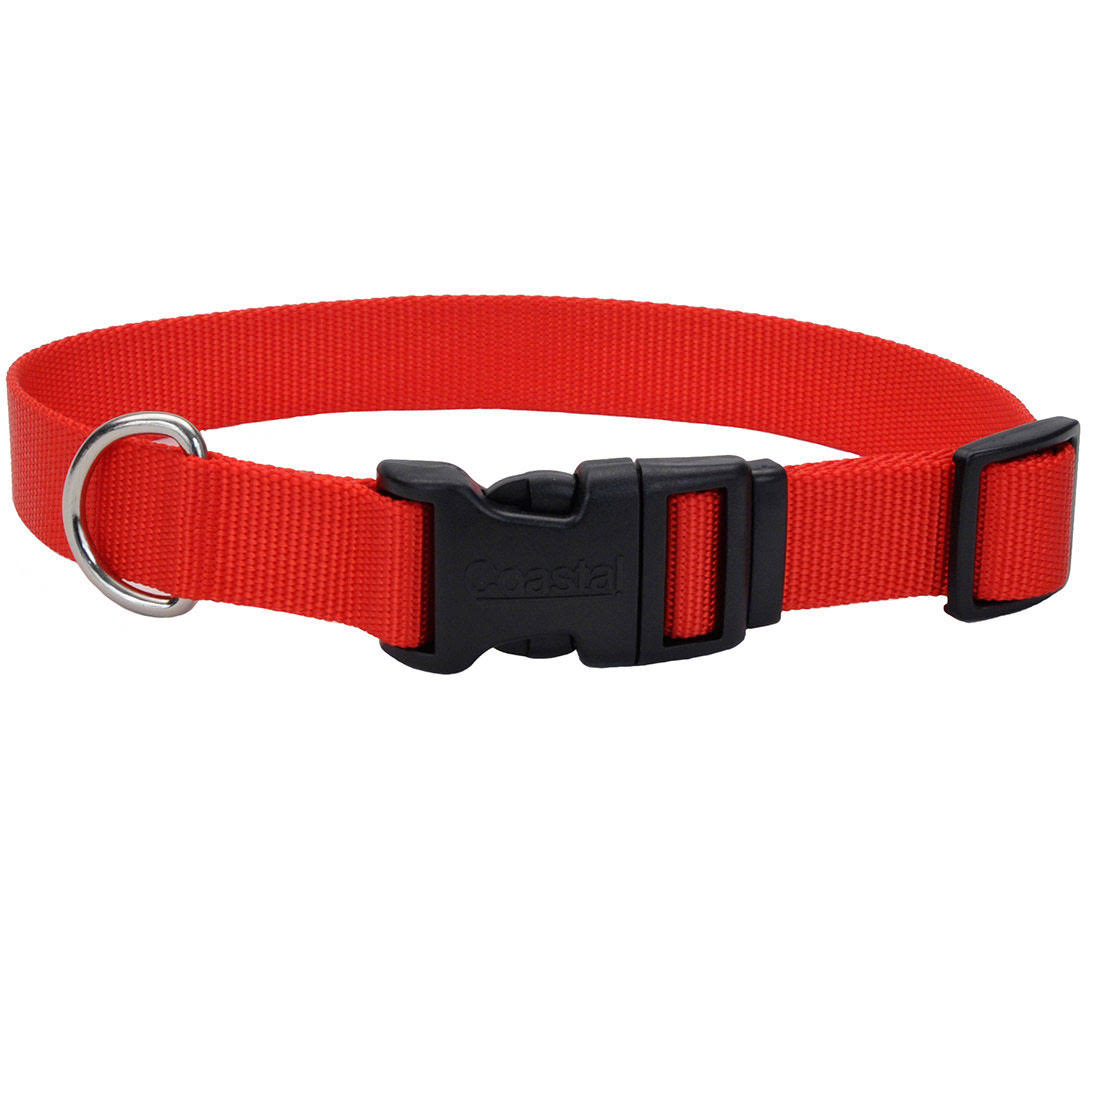 Coastal Pet Nylon Adjustable Dog Collar - Red, Large